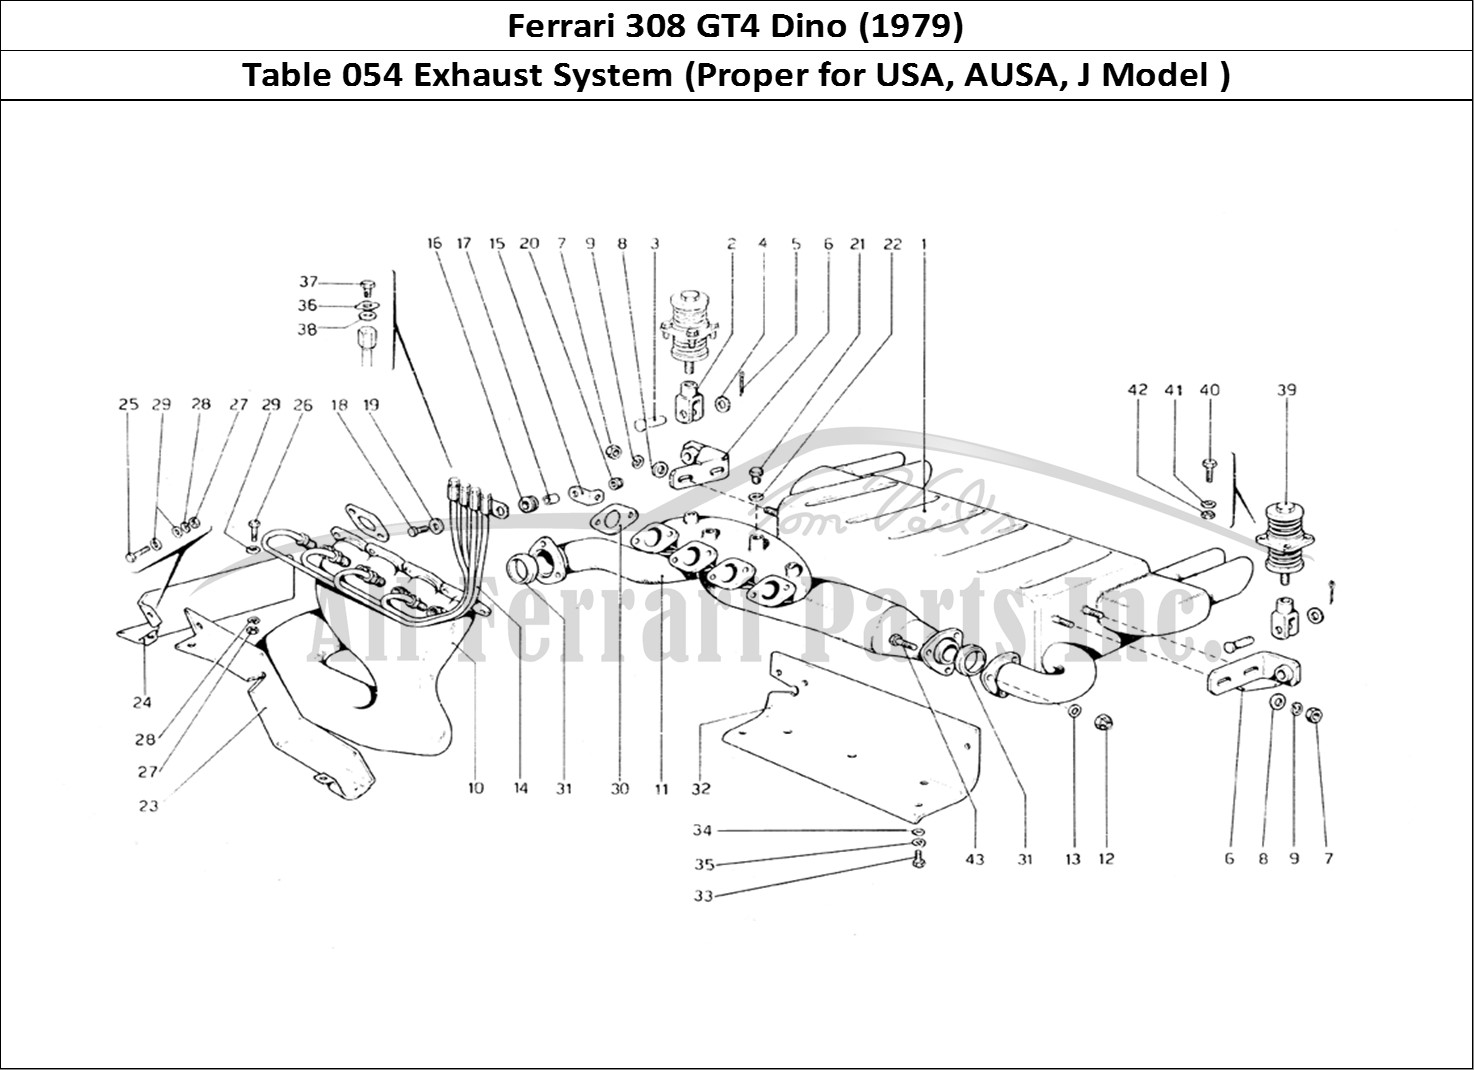 Ferrari Parts Ferrari 308 GT4 Dino (1979) Page 054 Exhaust System (Variants